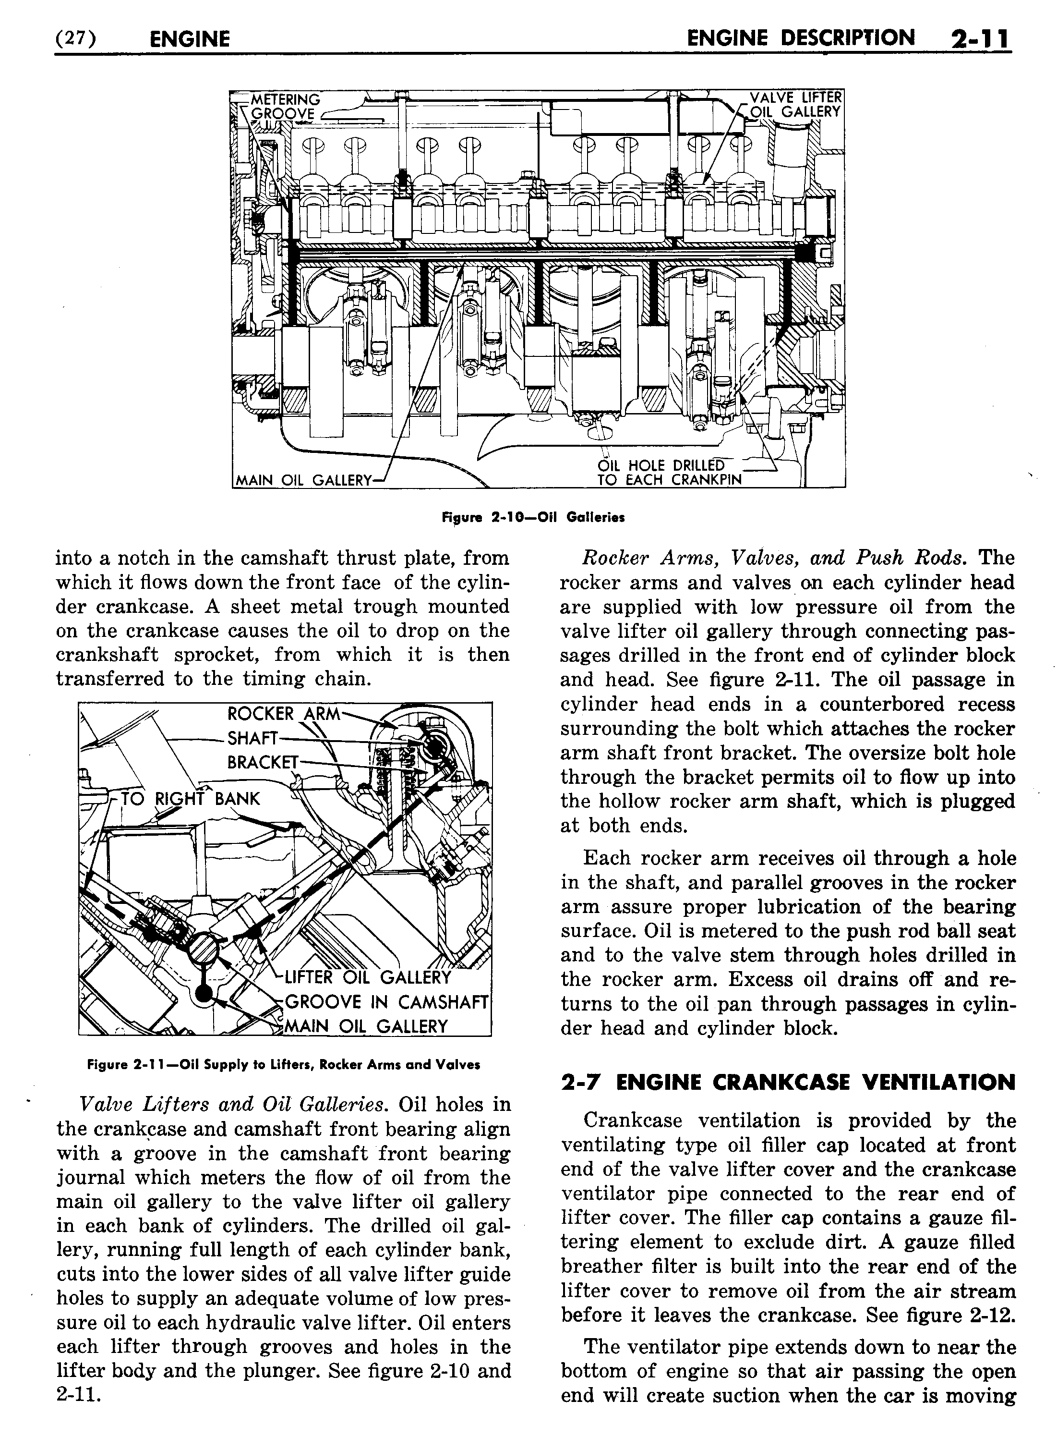 n_03 1955 Buick Shop Manual - Engine-011-011.jpg